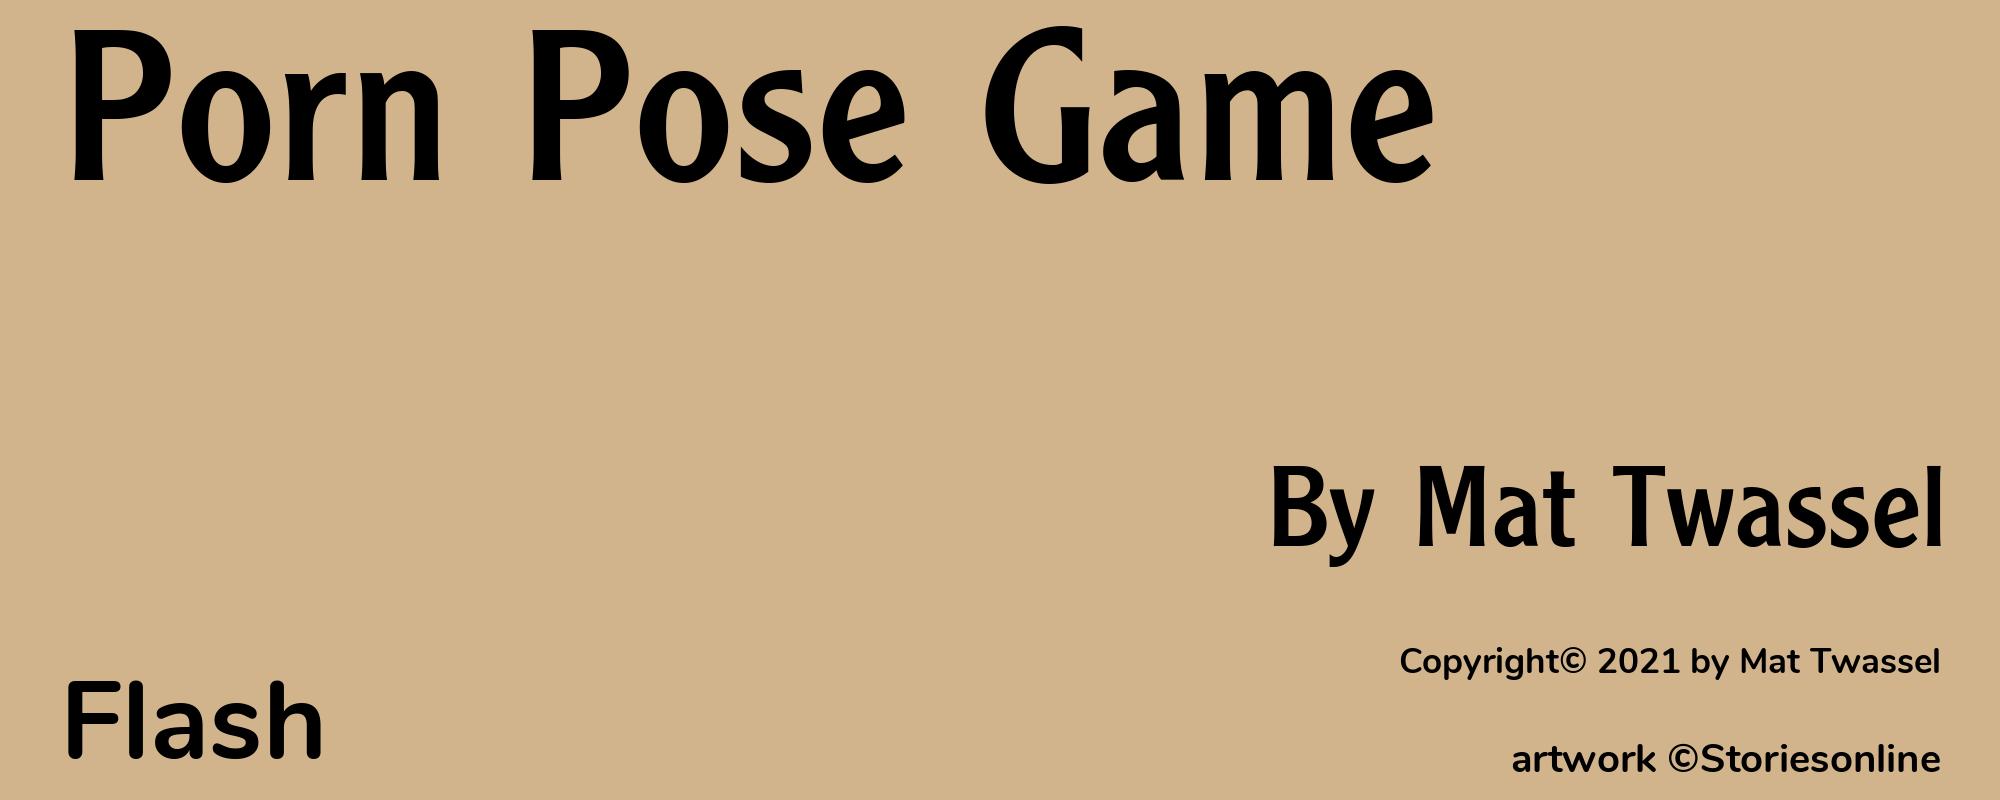 Porn Pose Game - Cover